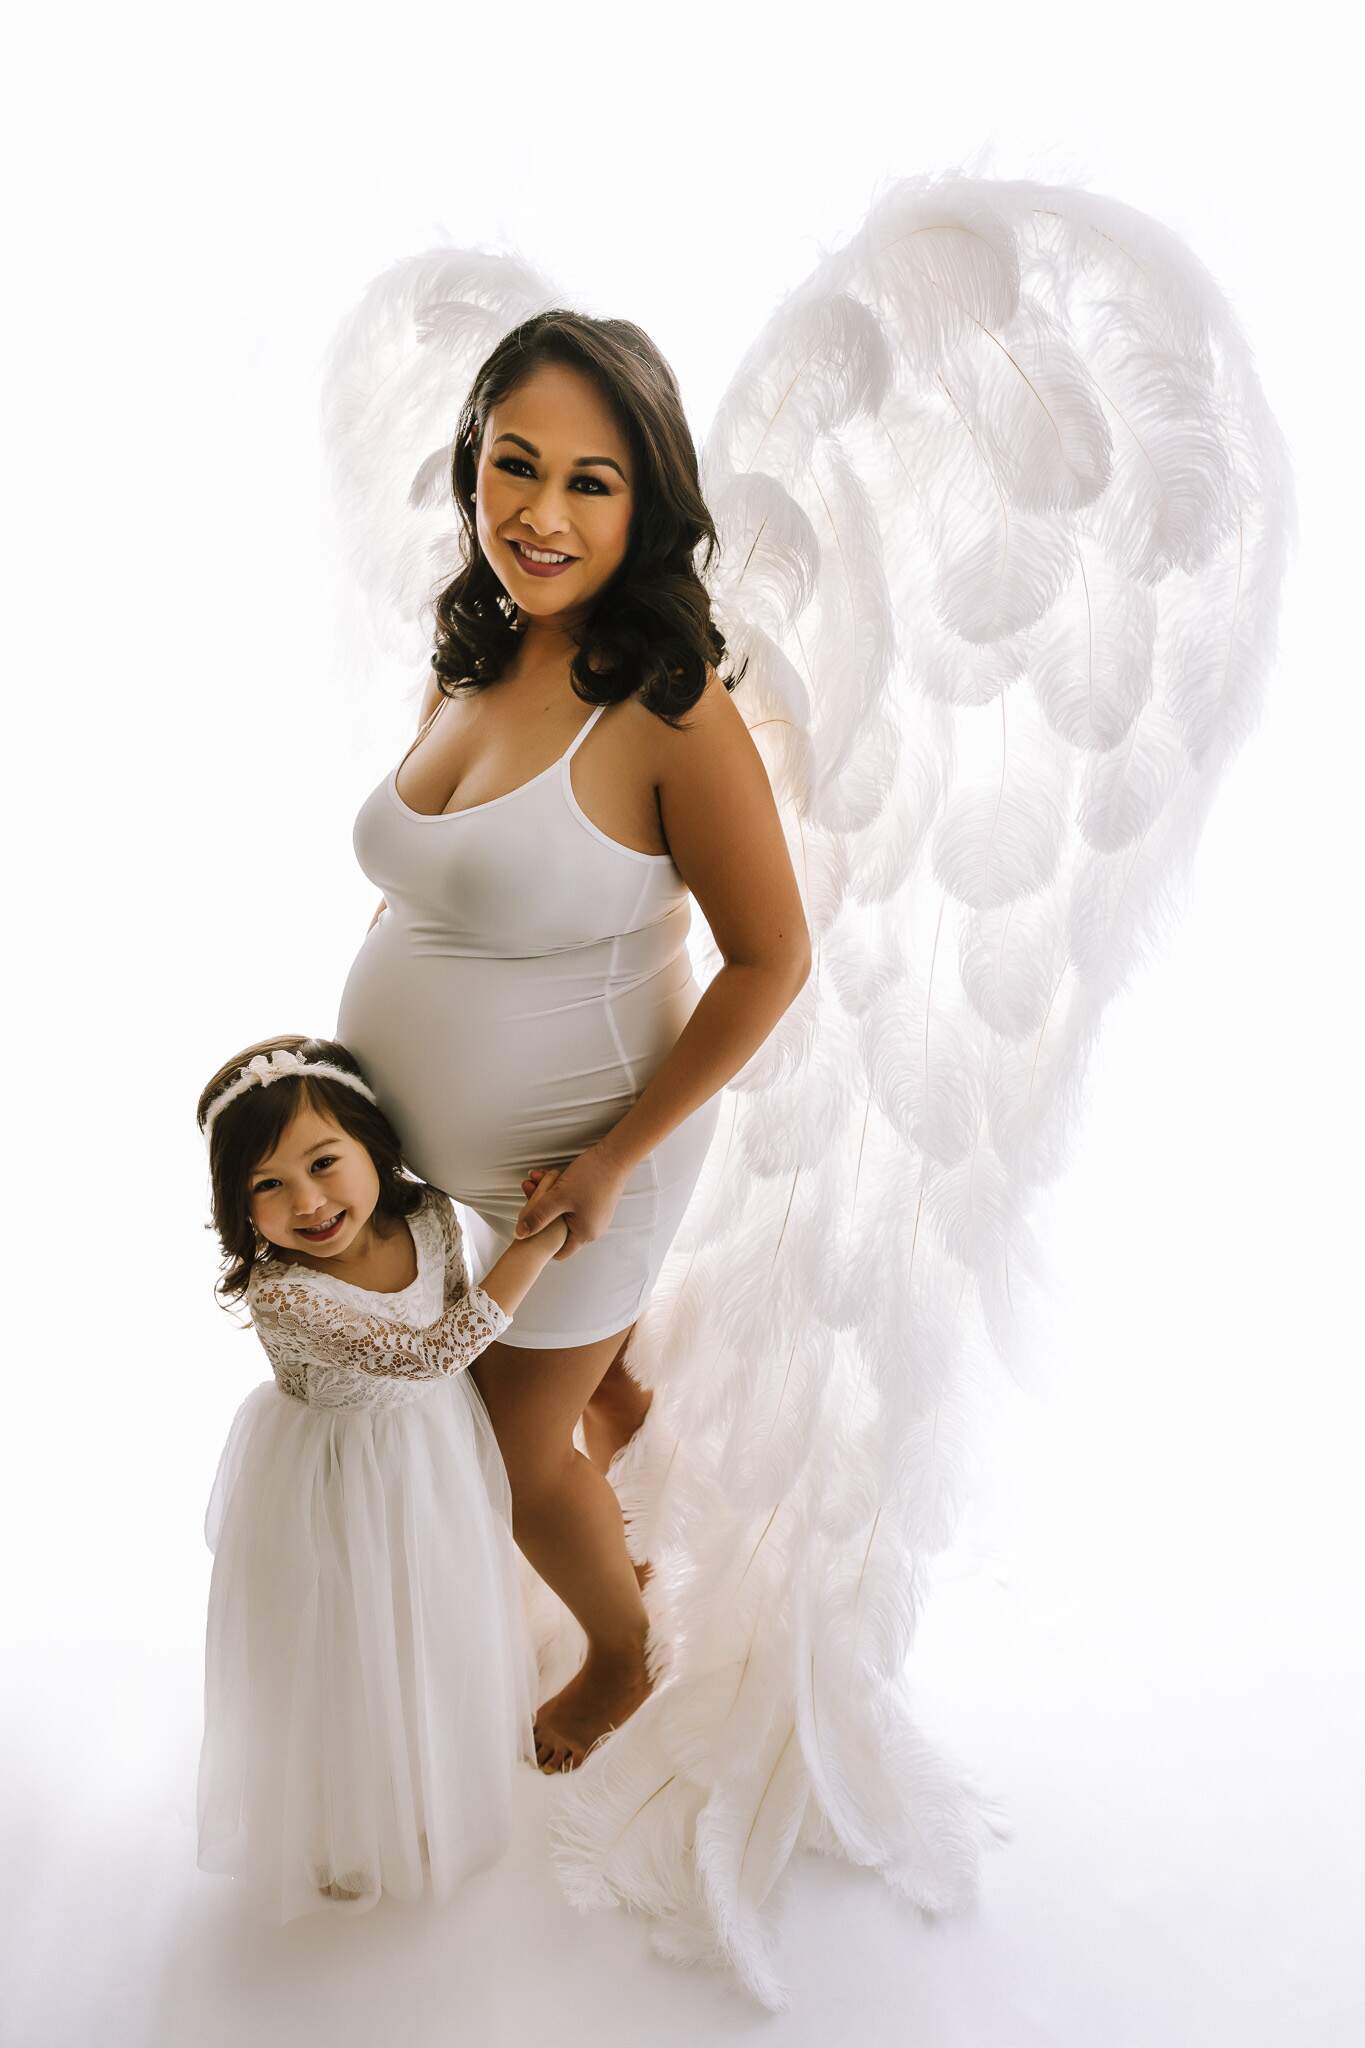 mother daughter backlit maternity image